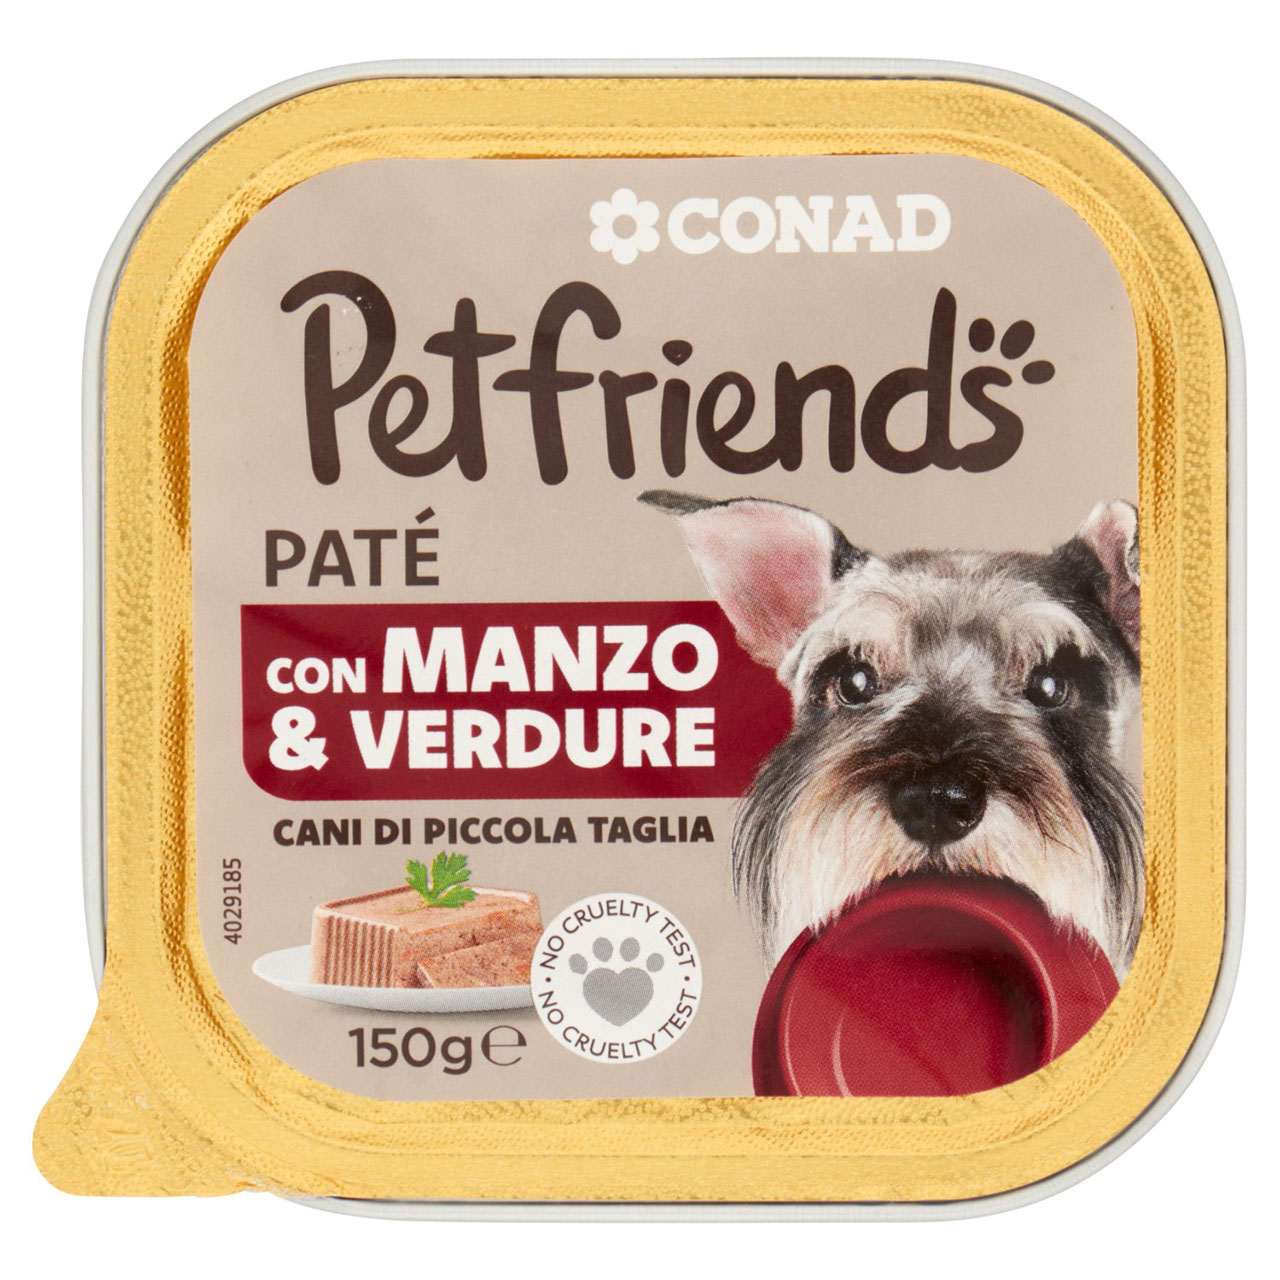 Patè Manzo e Verdure Petfriends 150g Conad